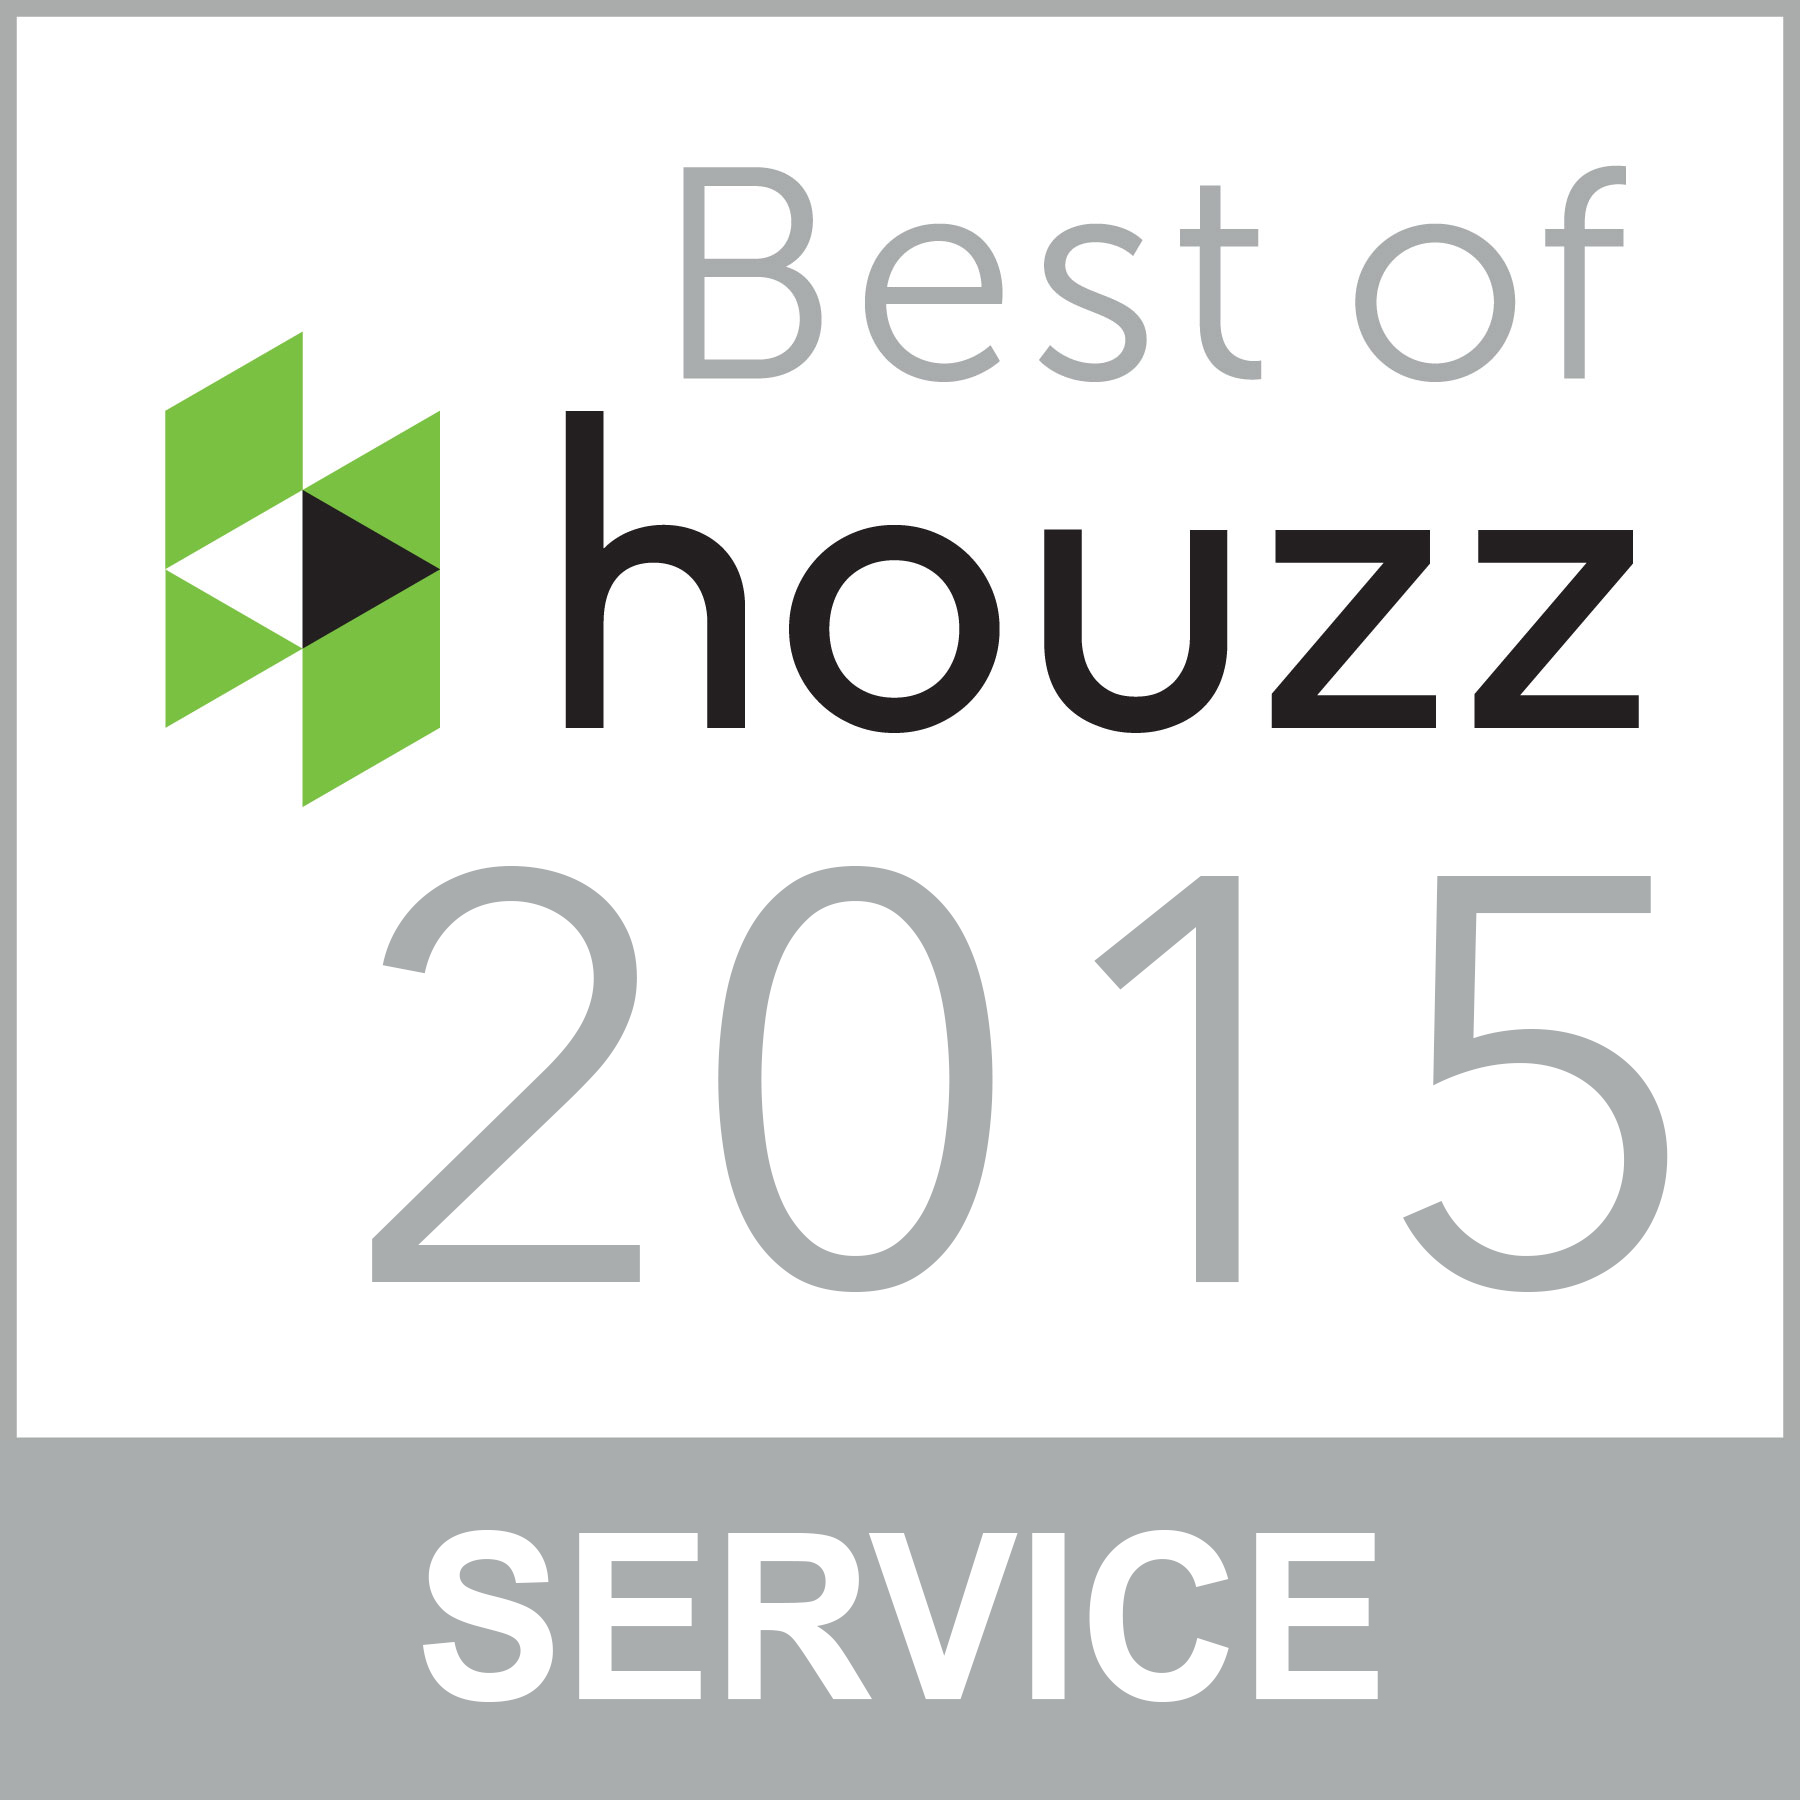 Best of Houzz 2015 Award in Customer Service